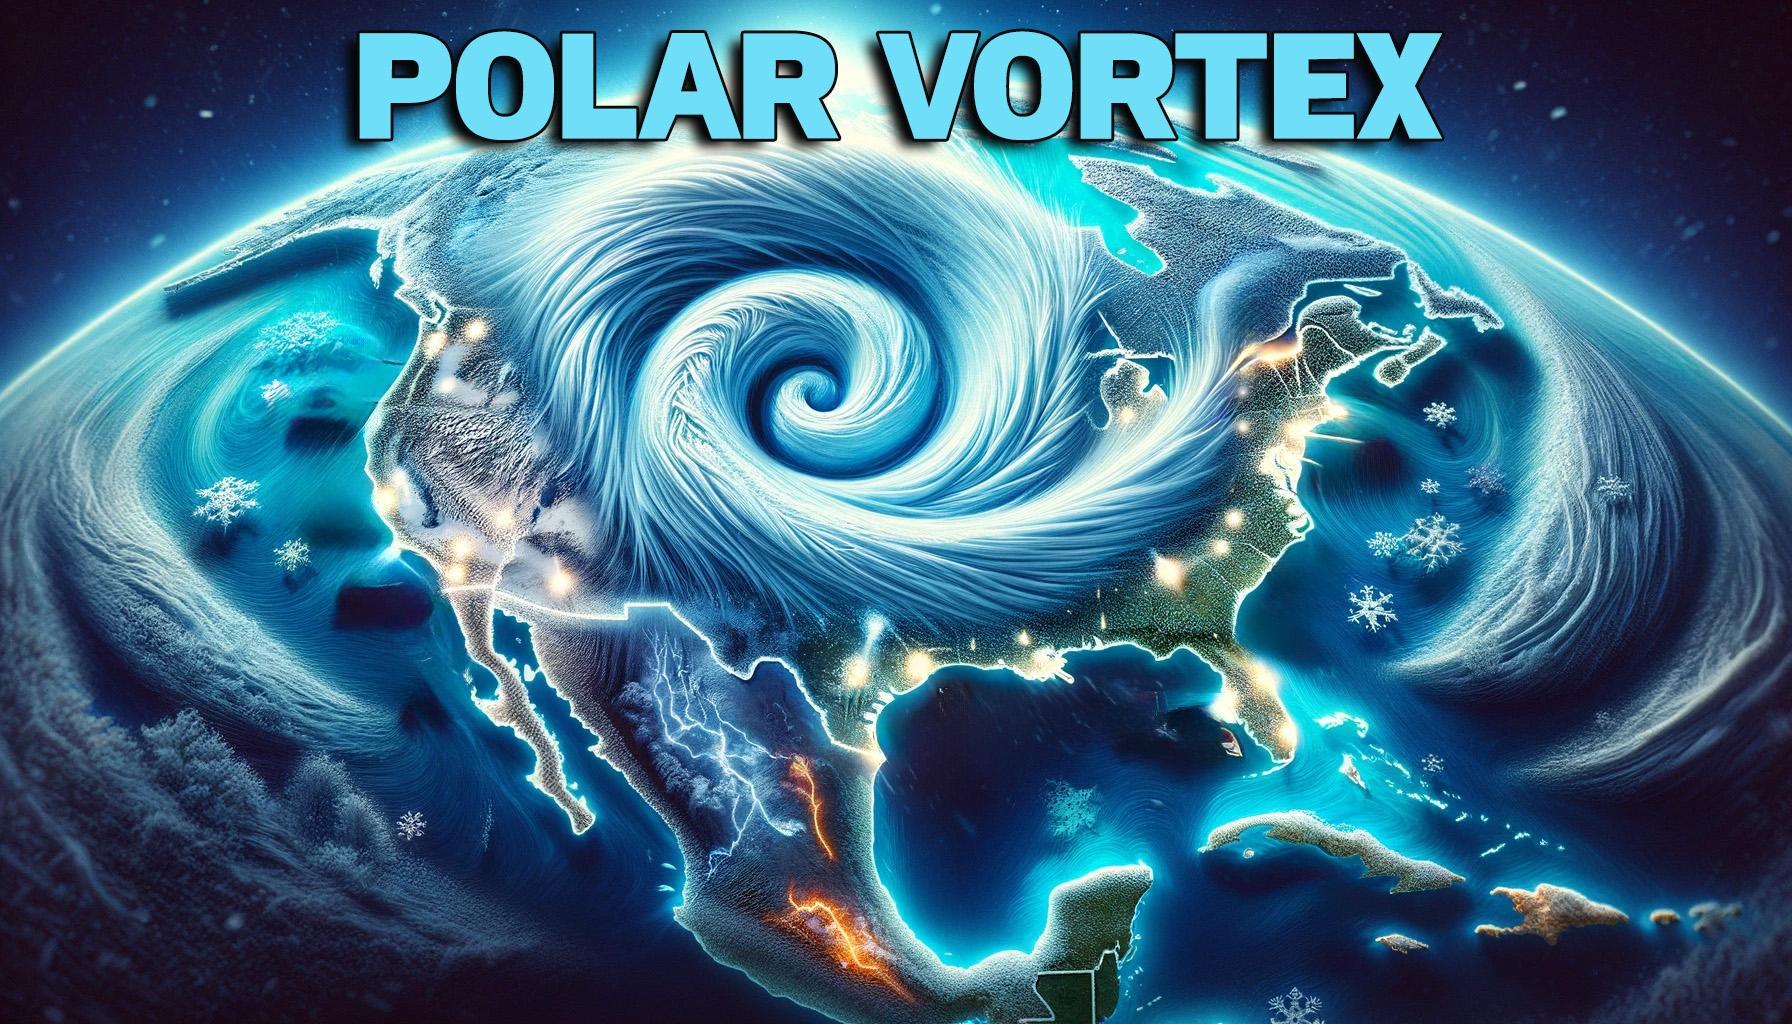 Polar Vortex Weather and News Graphic